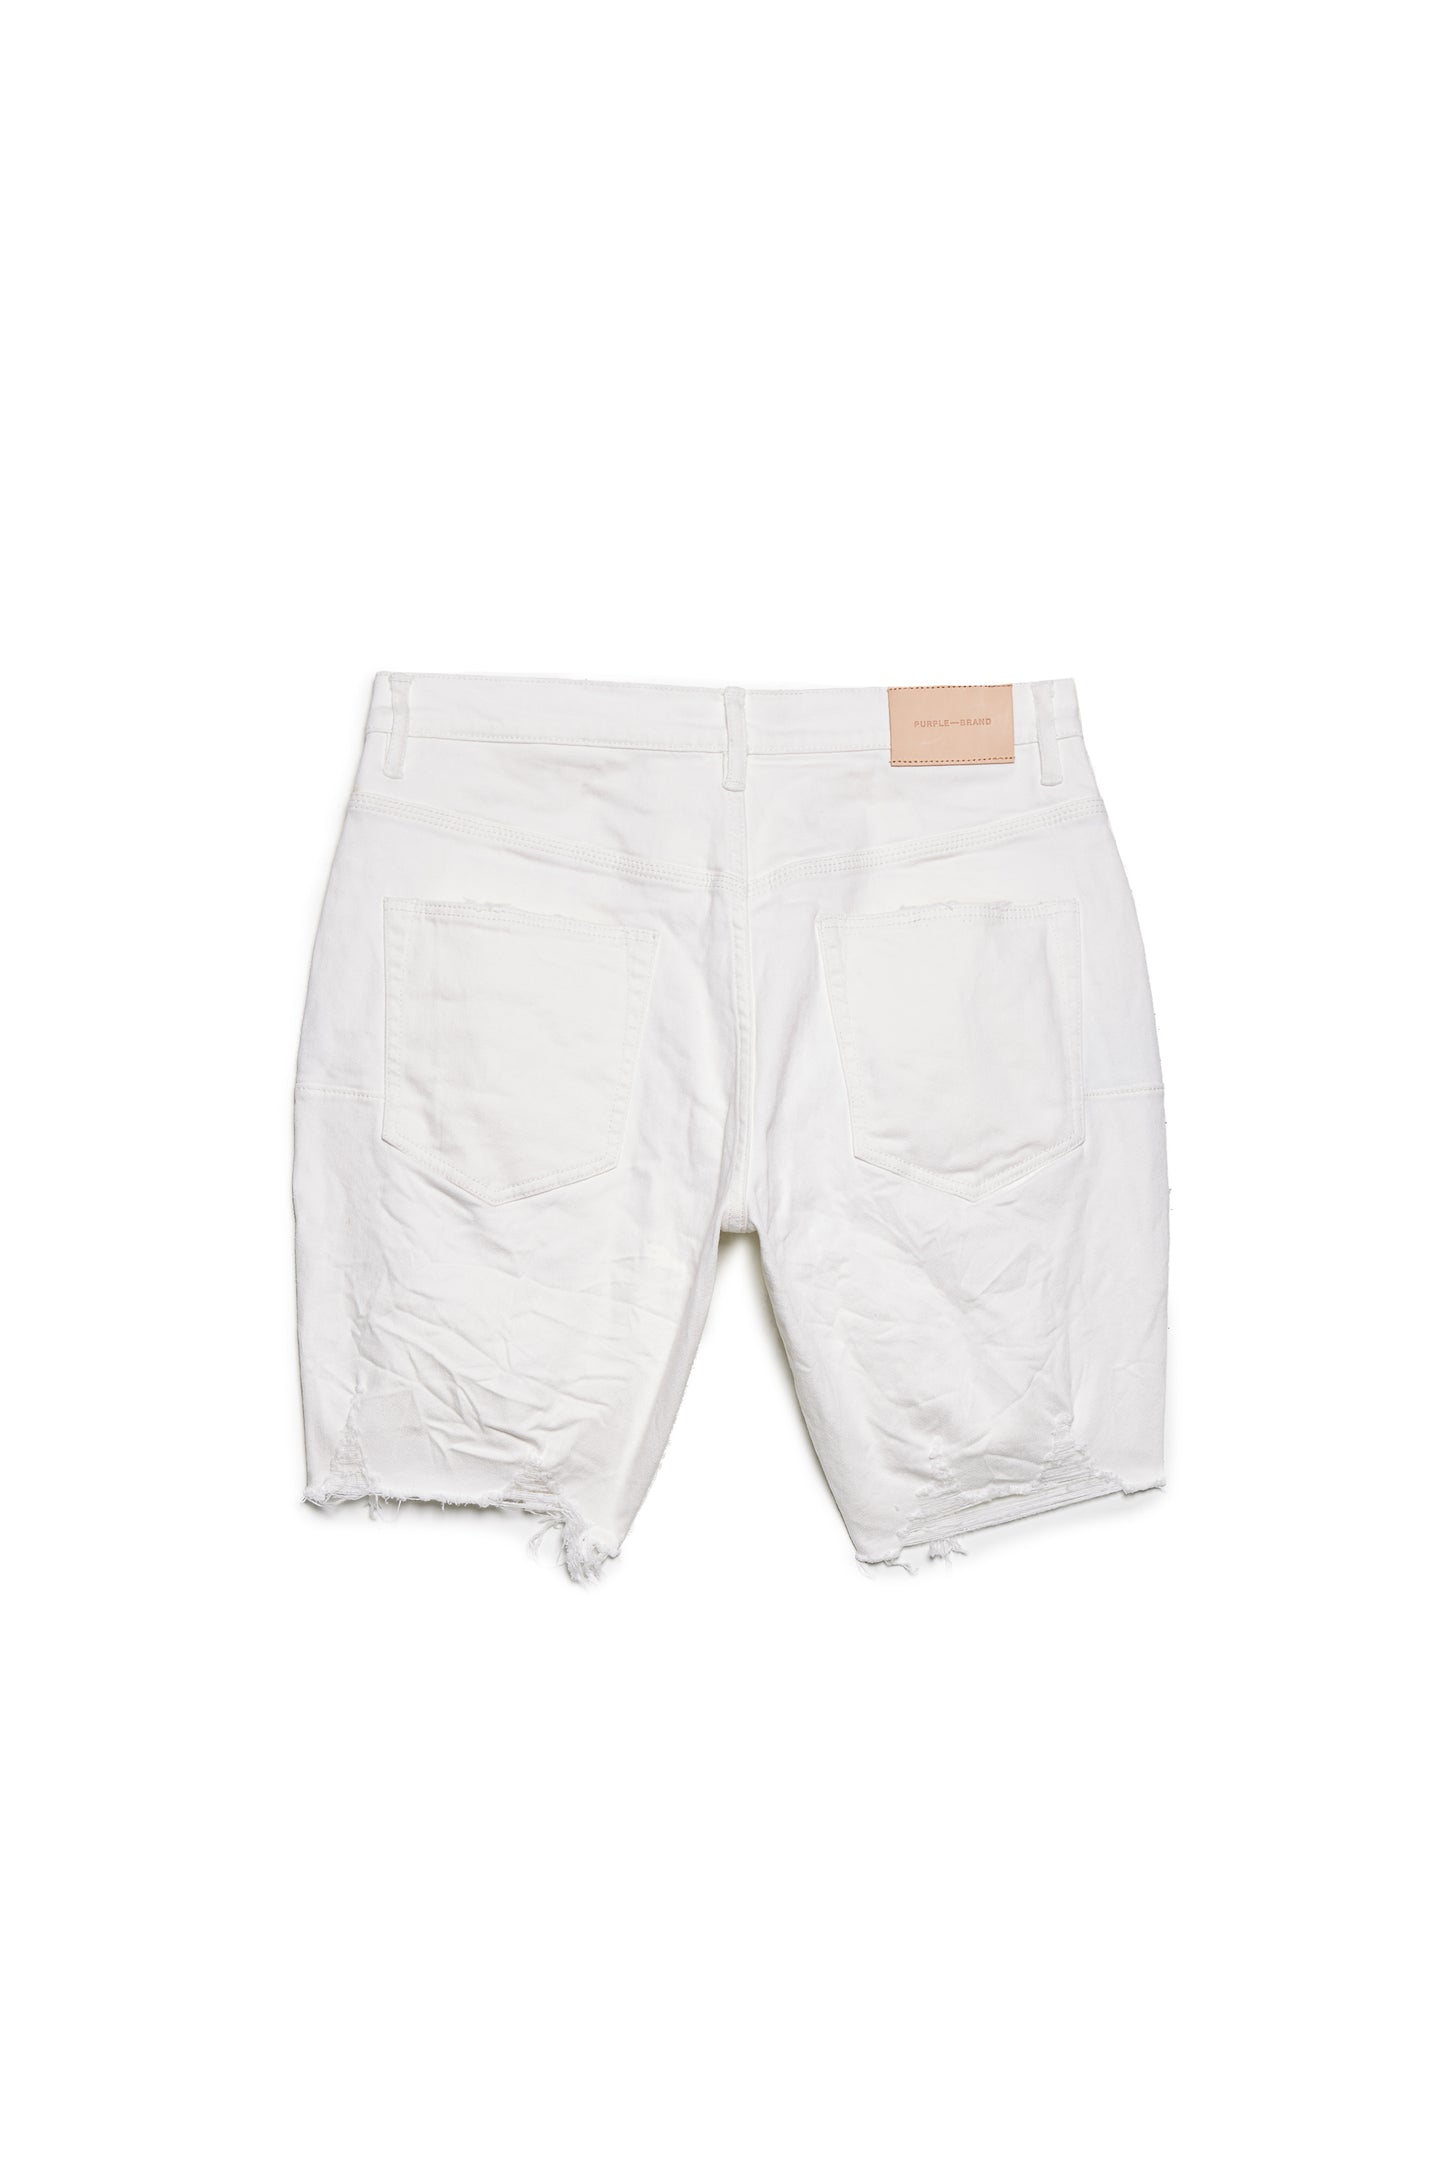 PURPLE BRAND - Men's Denim Jean Short - Mid Rise Short - Style No. P020 - White Stripe Paint - Back